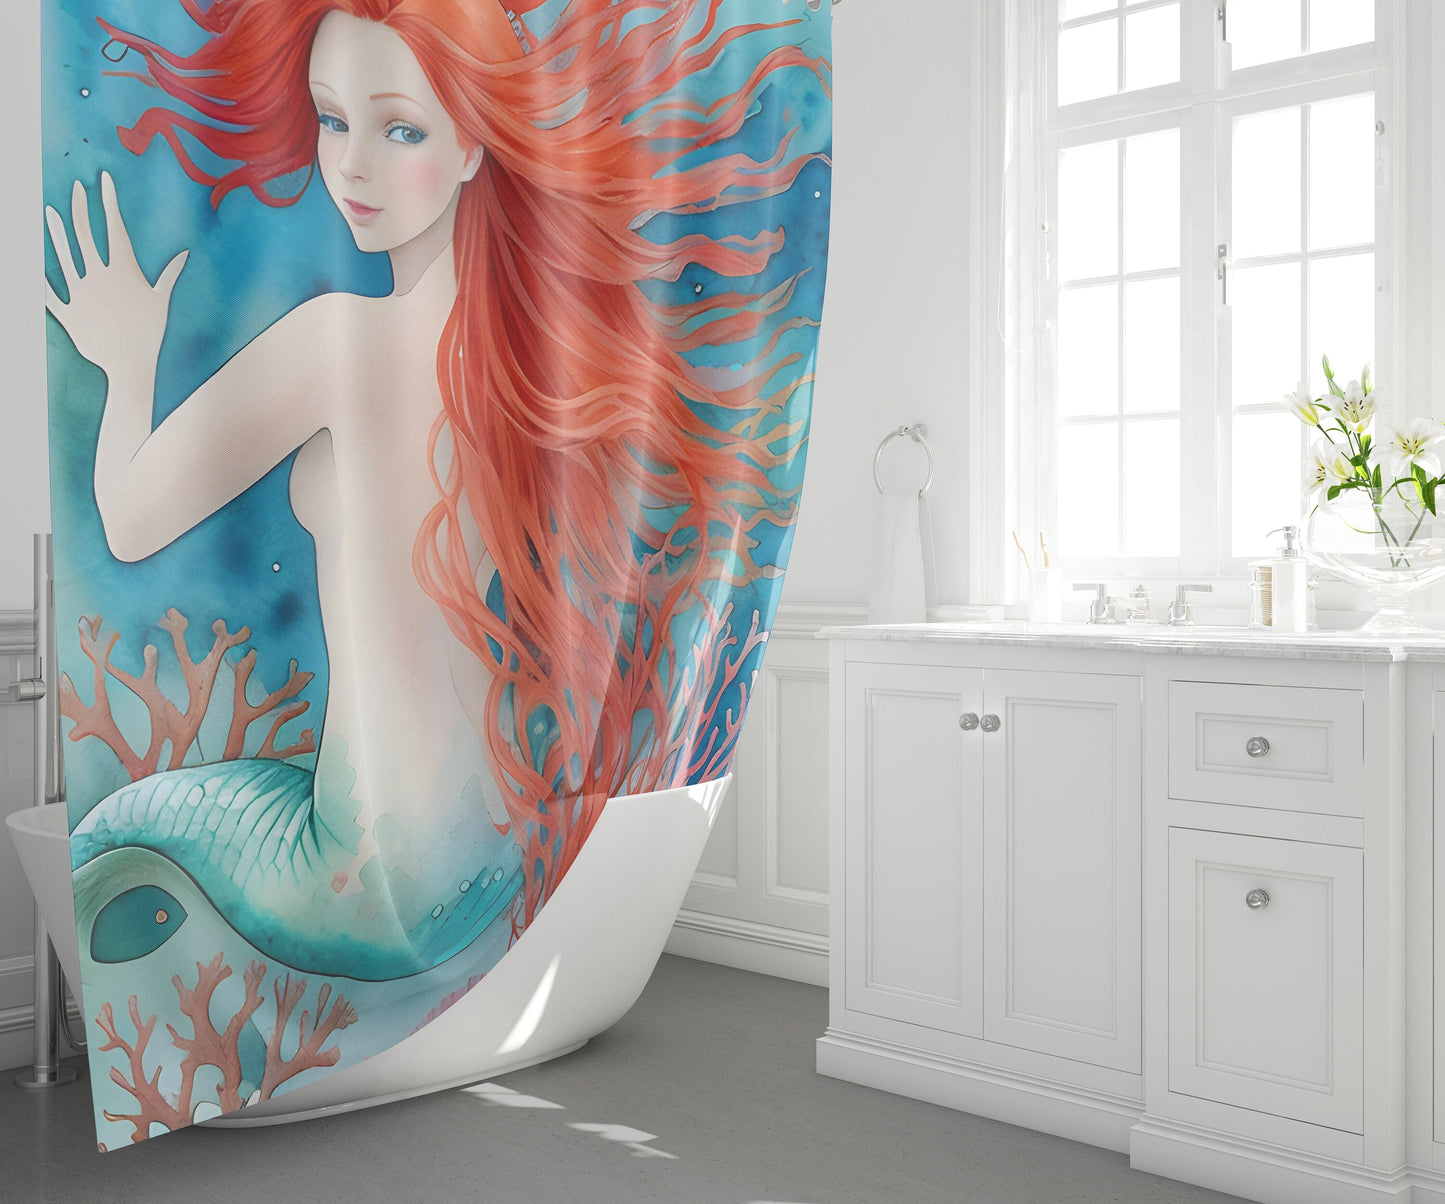 Mermaid Shower Curtain ocean shower curtains mermaid shower curtain red haired sexy mermaid bath decor